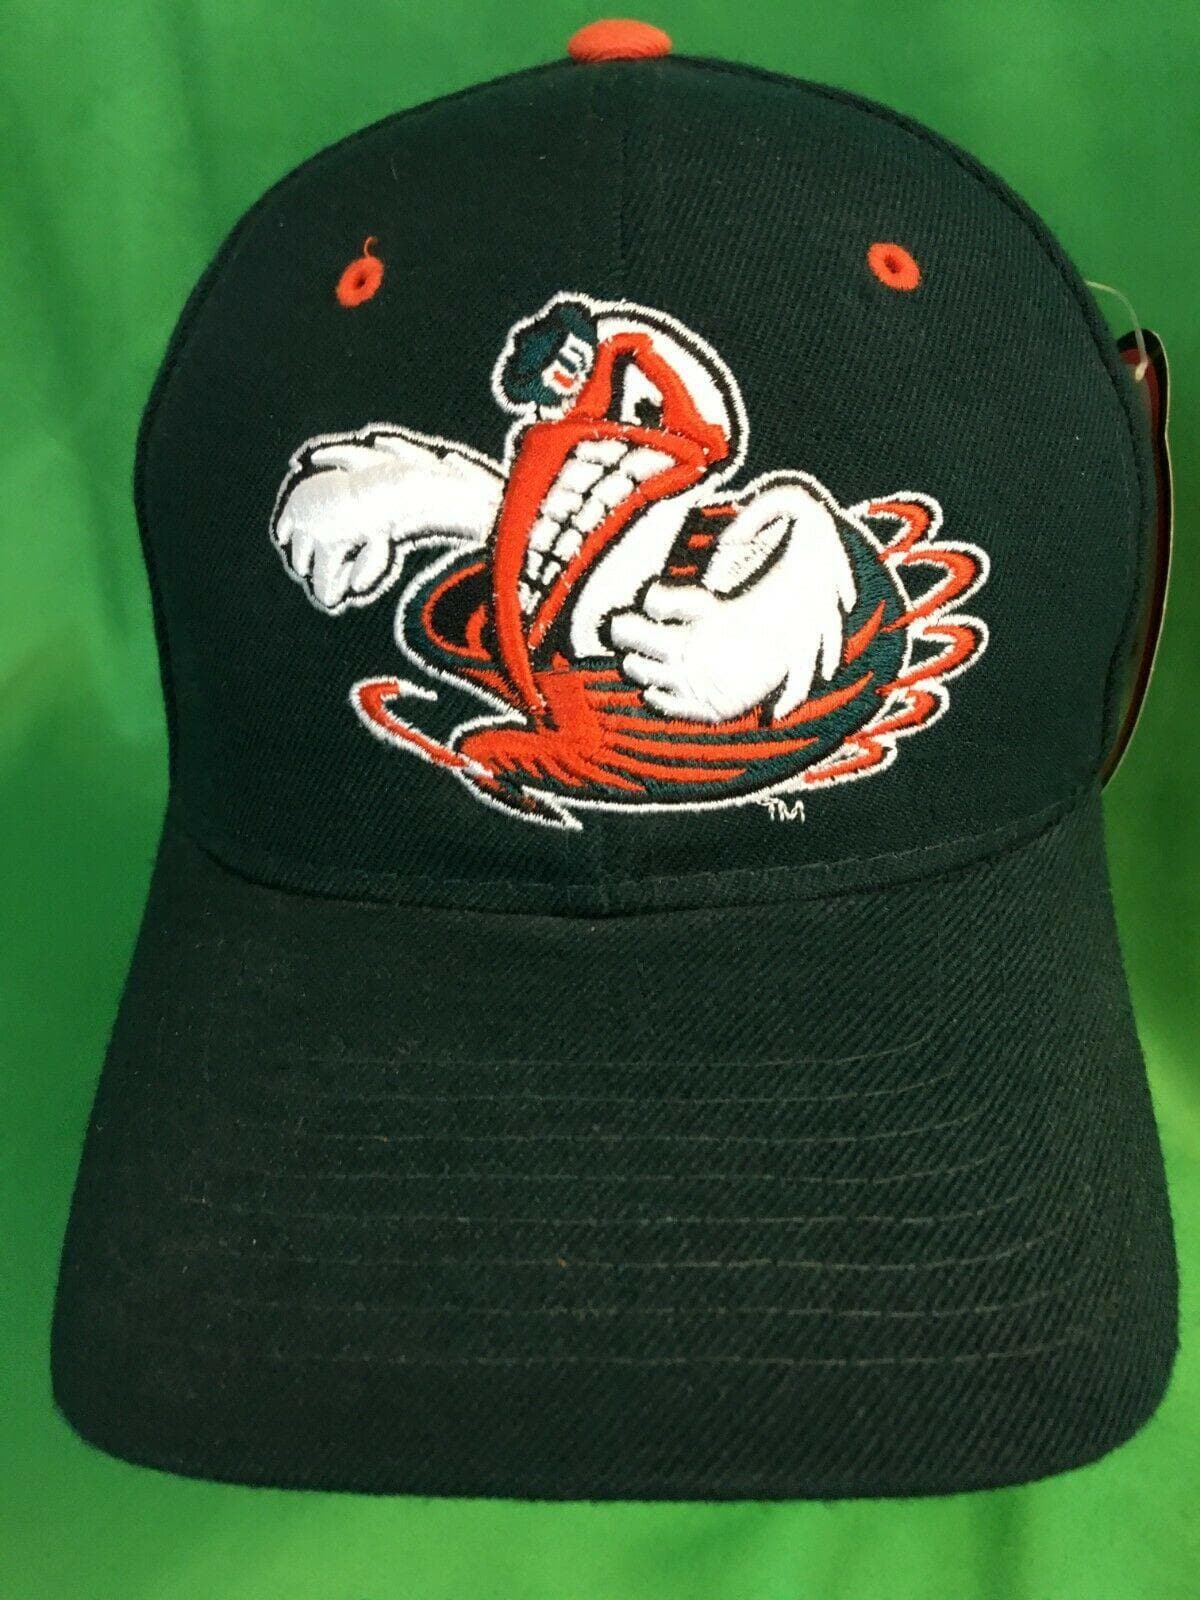 NCAA Miami Hurricanes Zephyr Hat/Cap Size 7-3/8 NWT